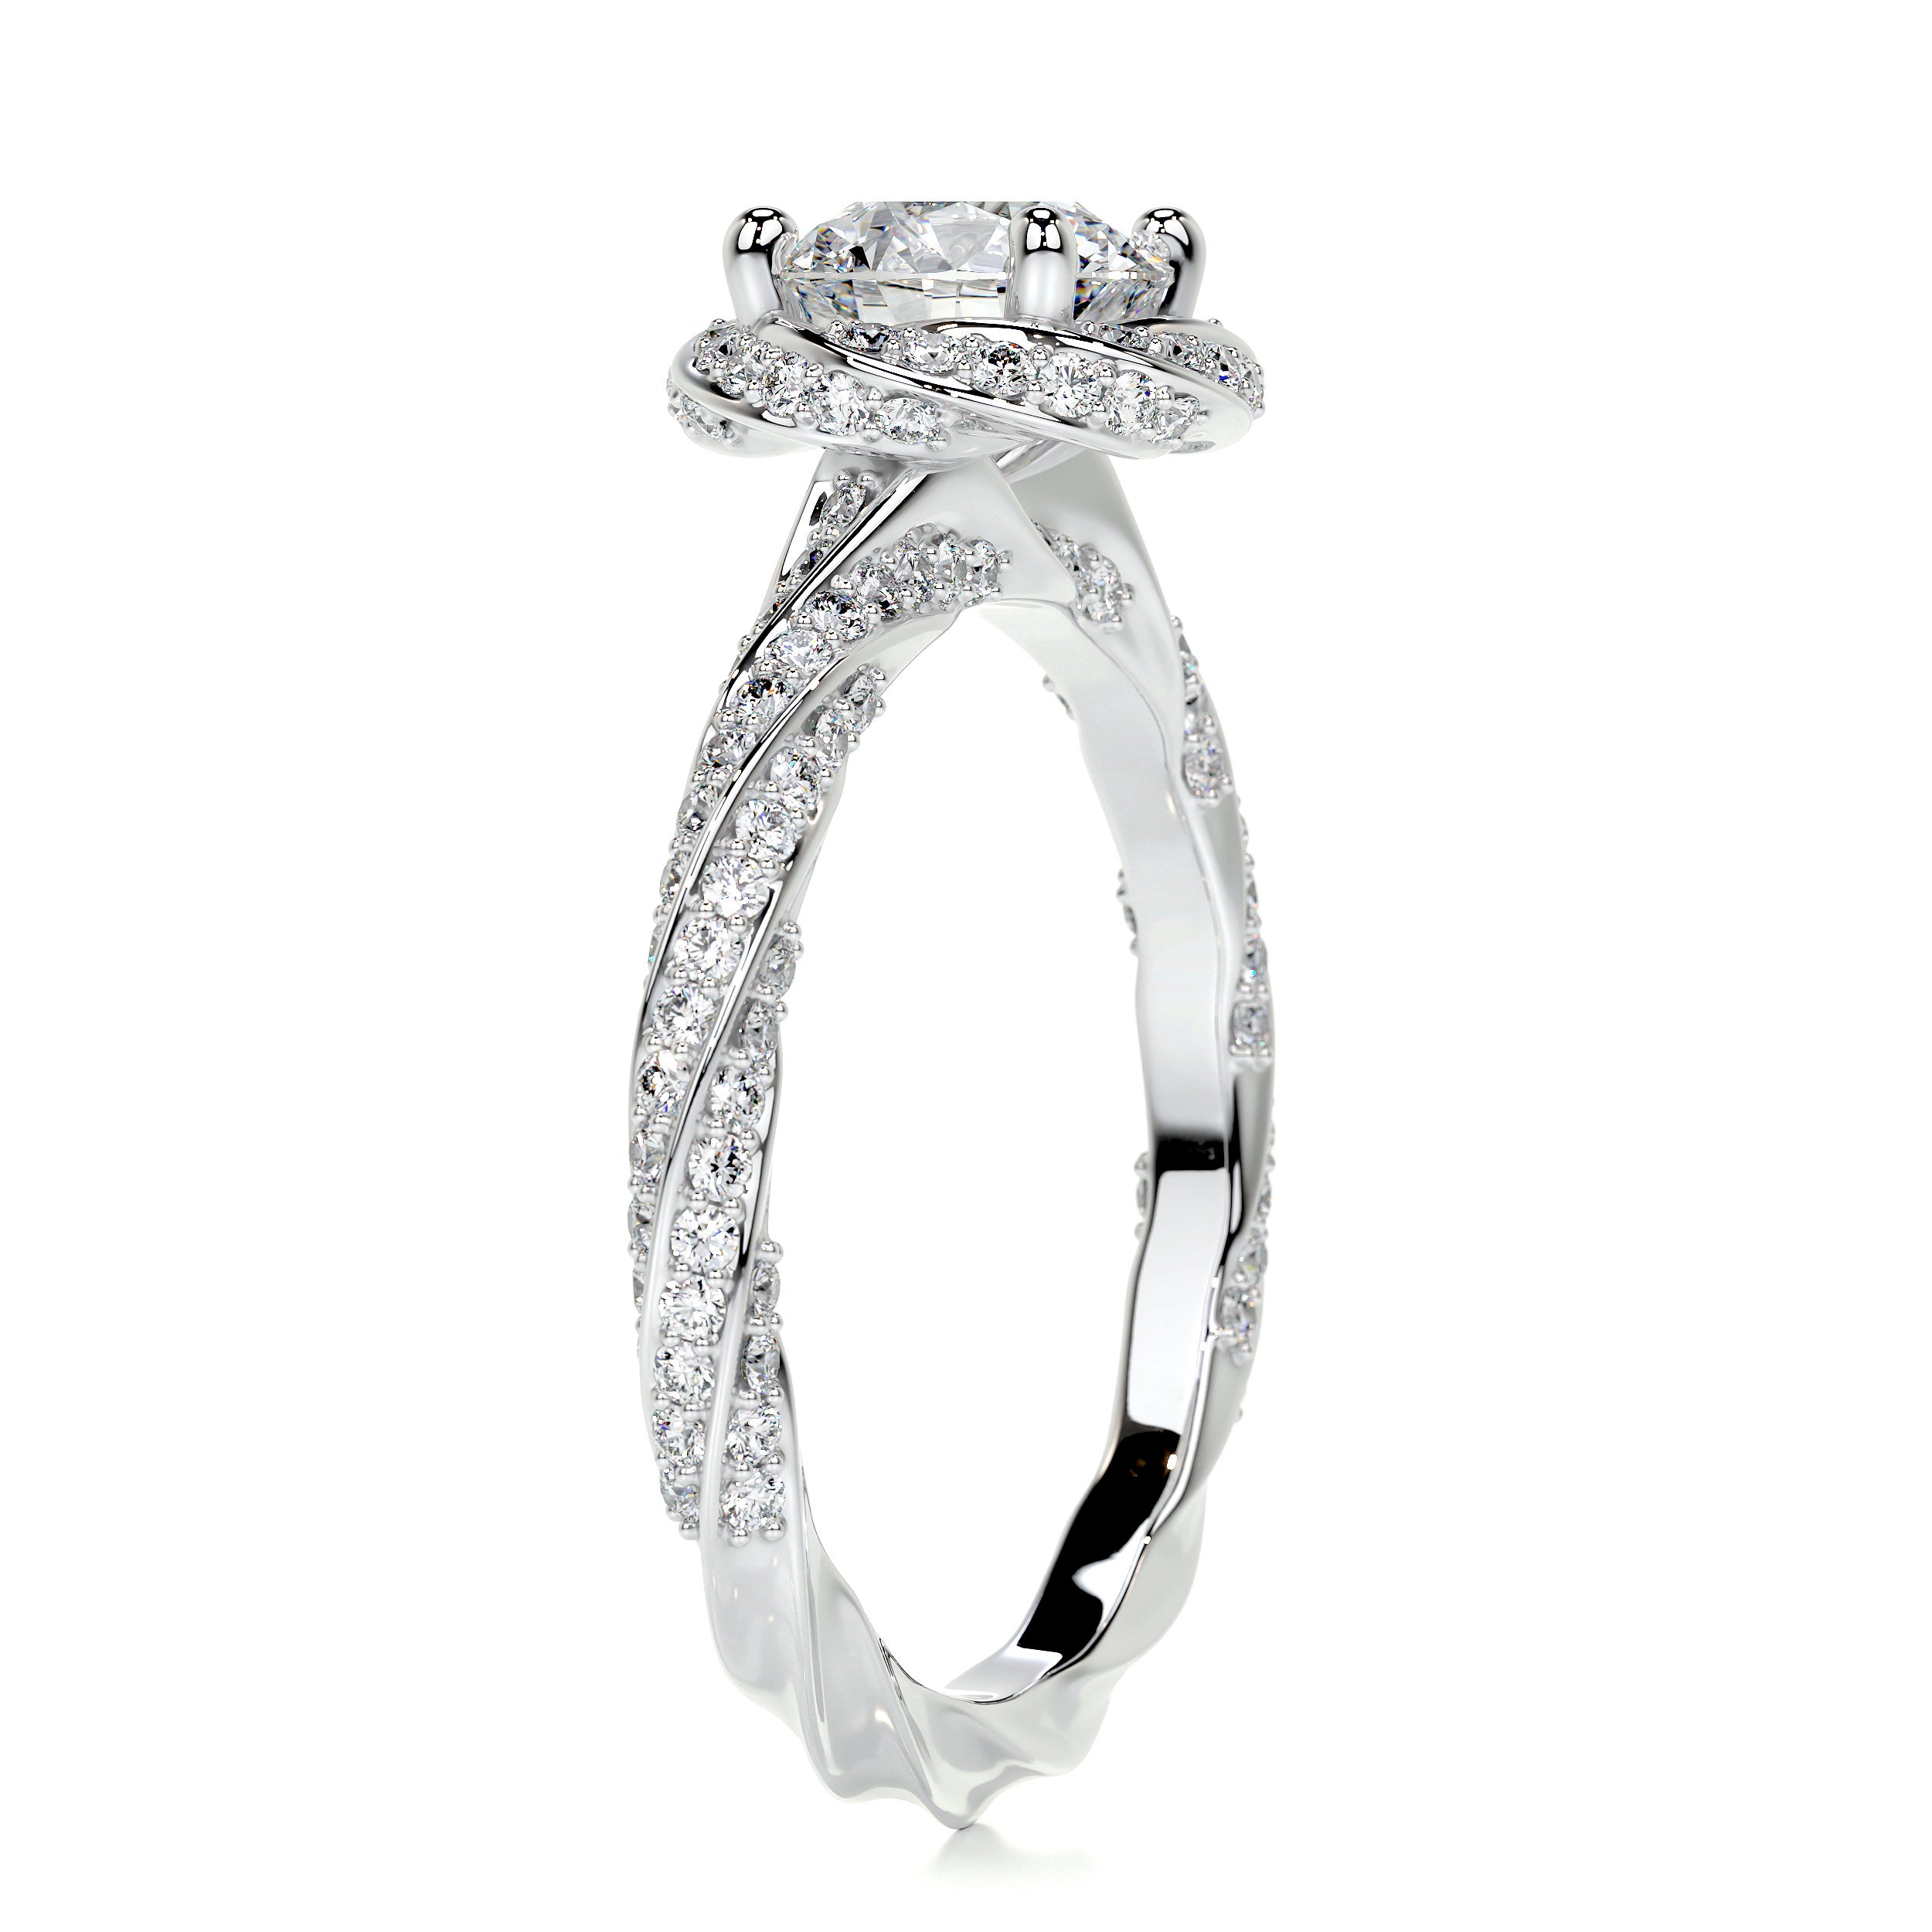 Joanne Diamond Engagement Ring   (1.50 Carat) -18K White Gold